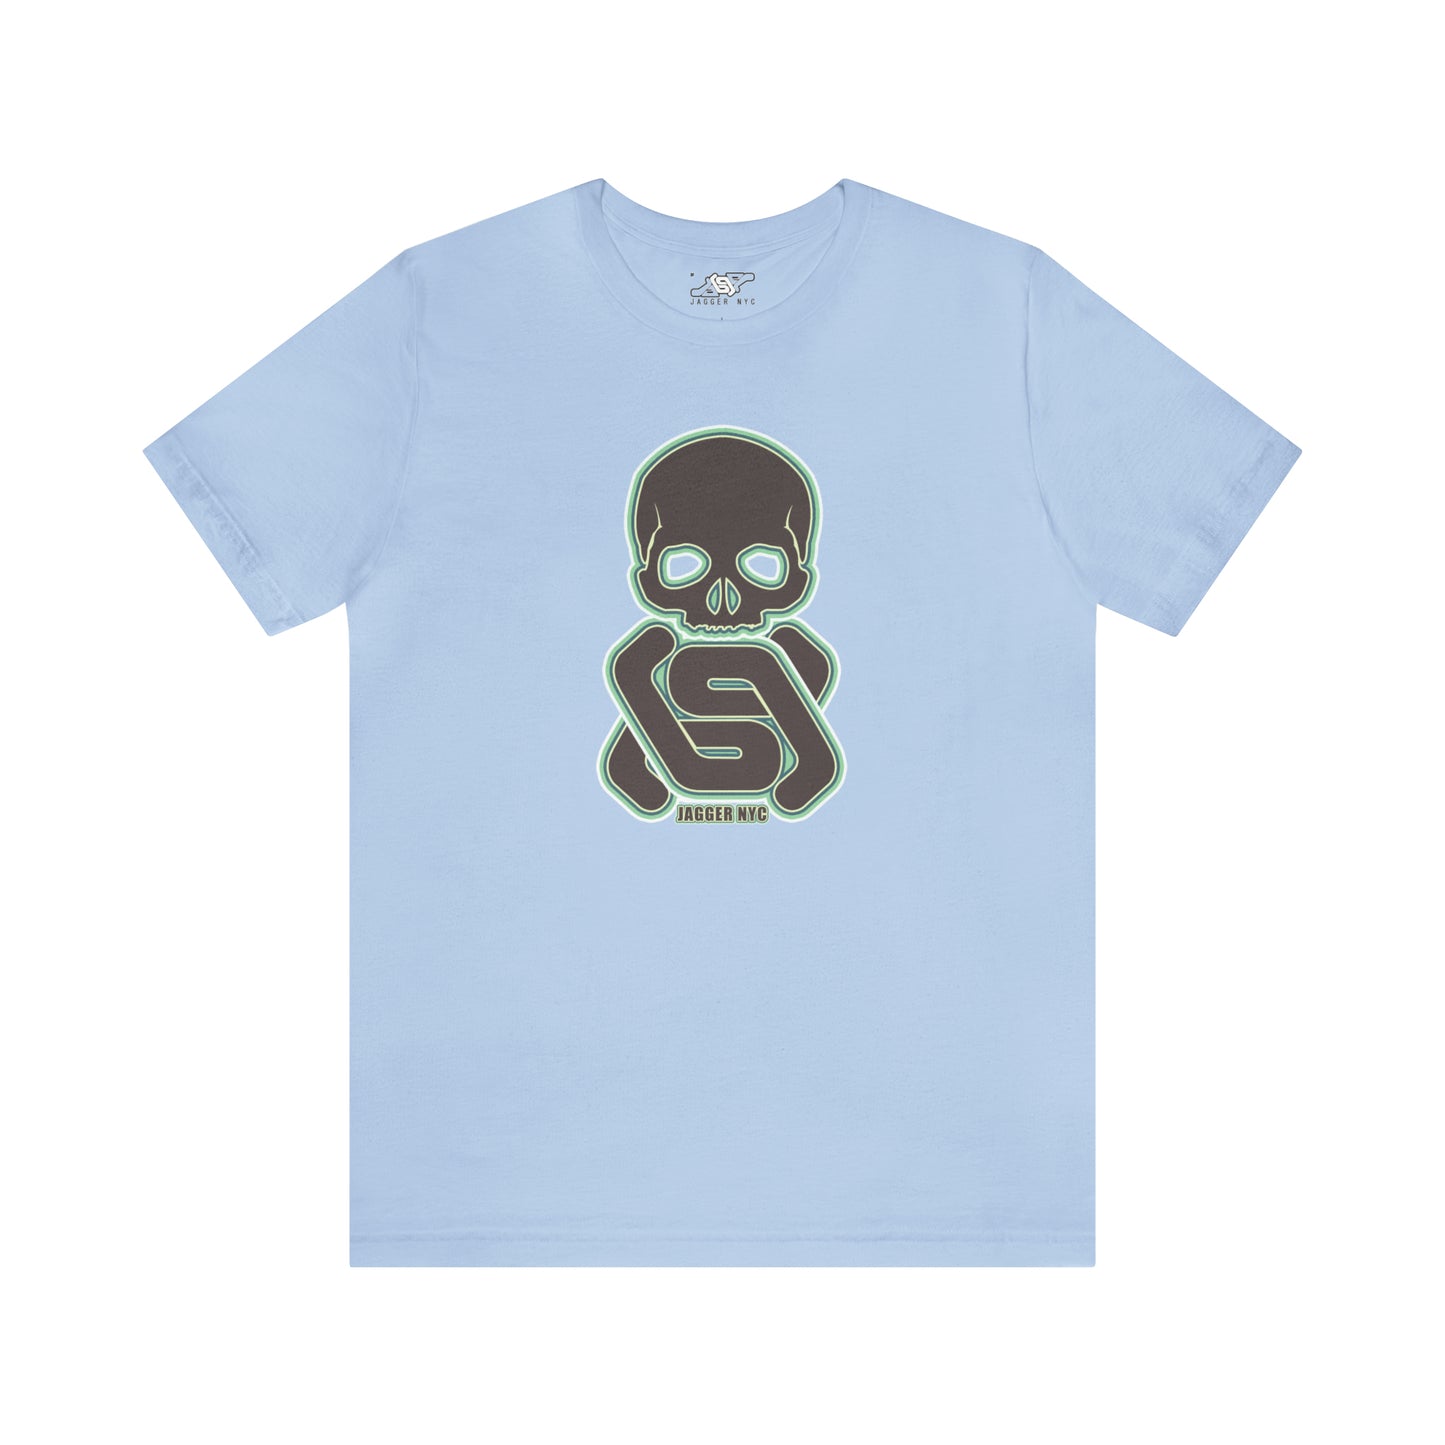 "Bone Digger - v3" T-shirt